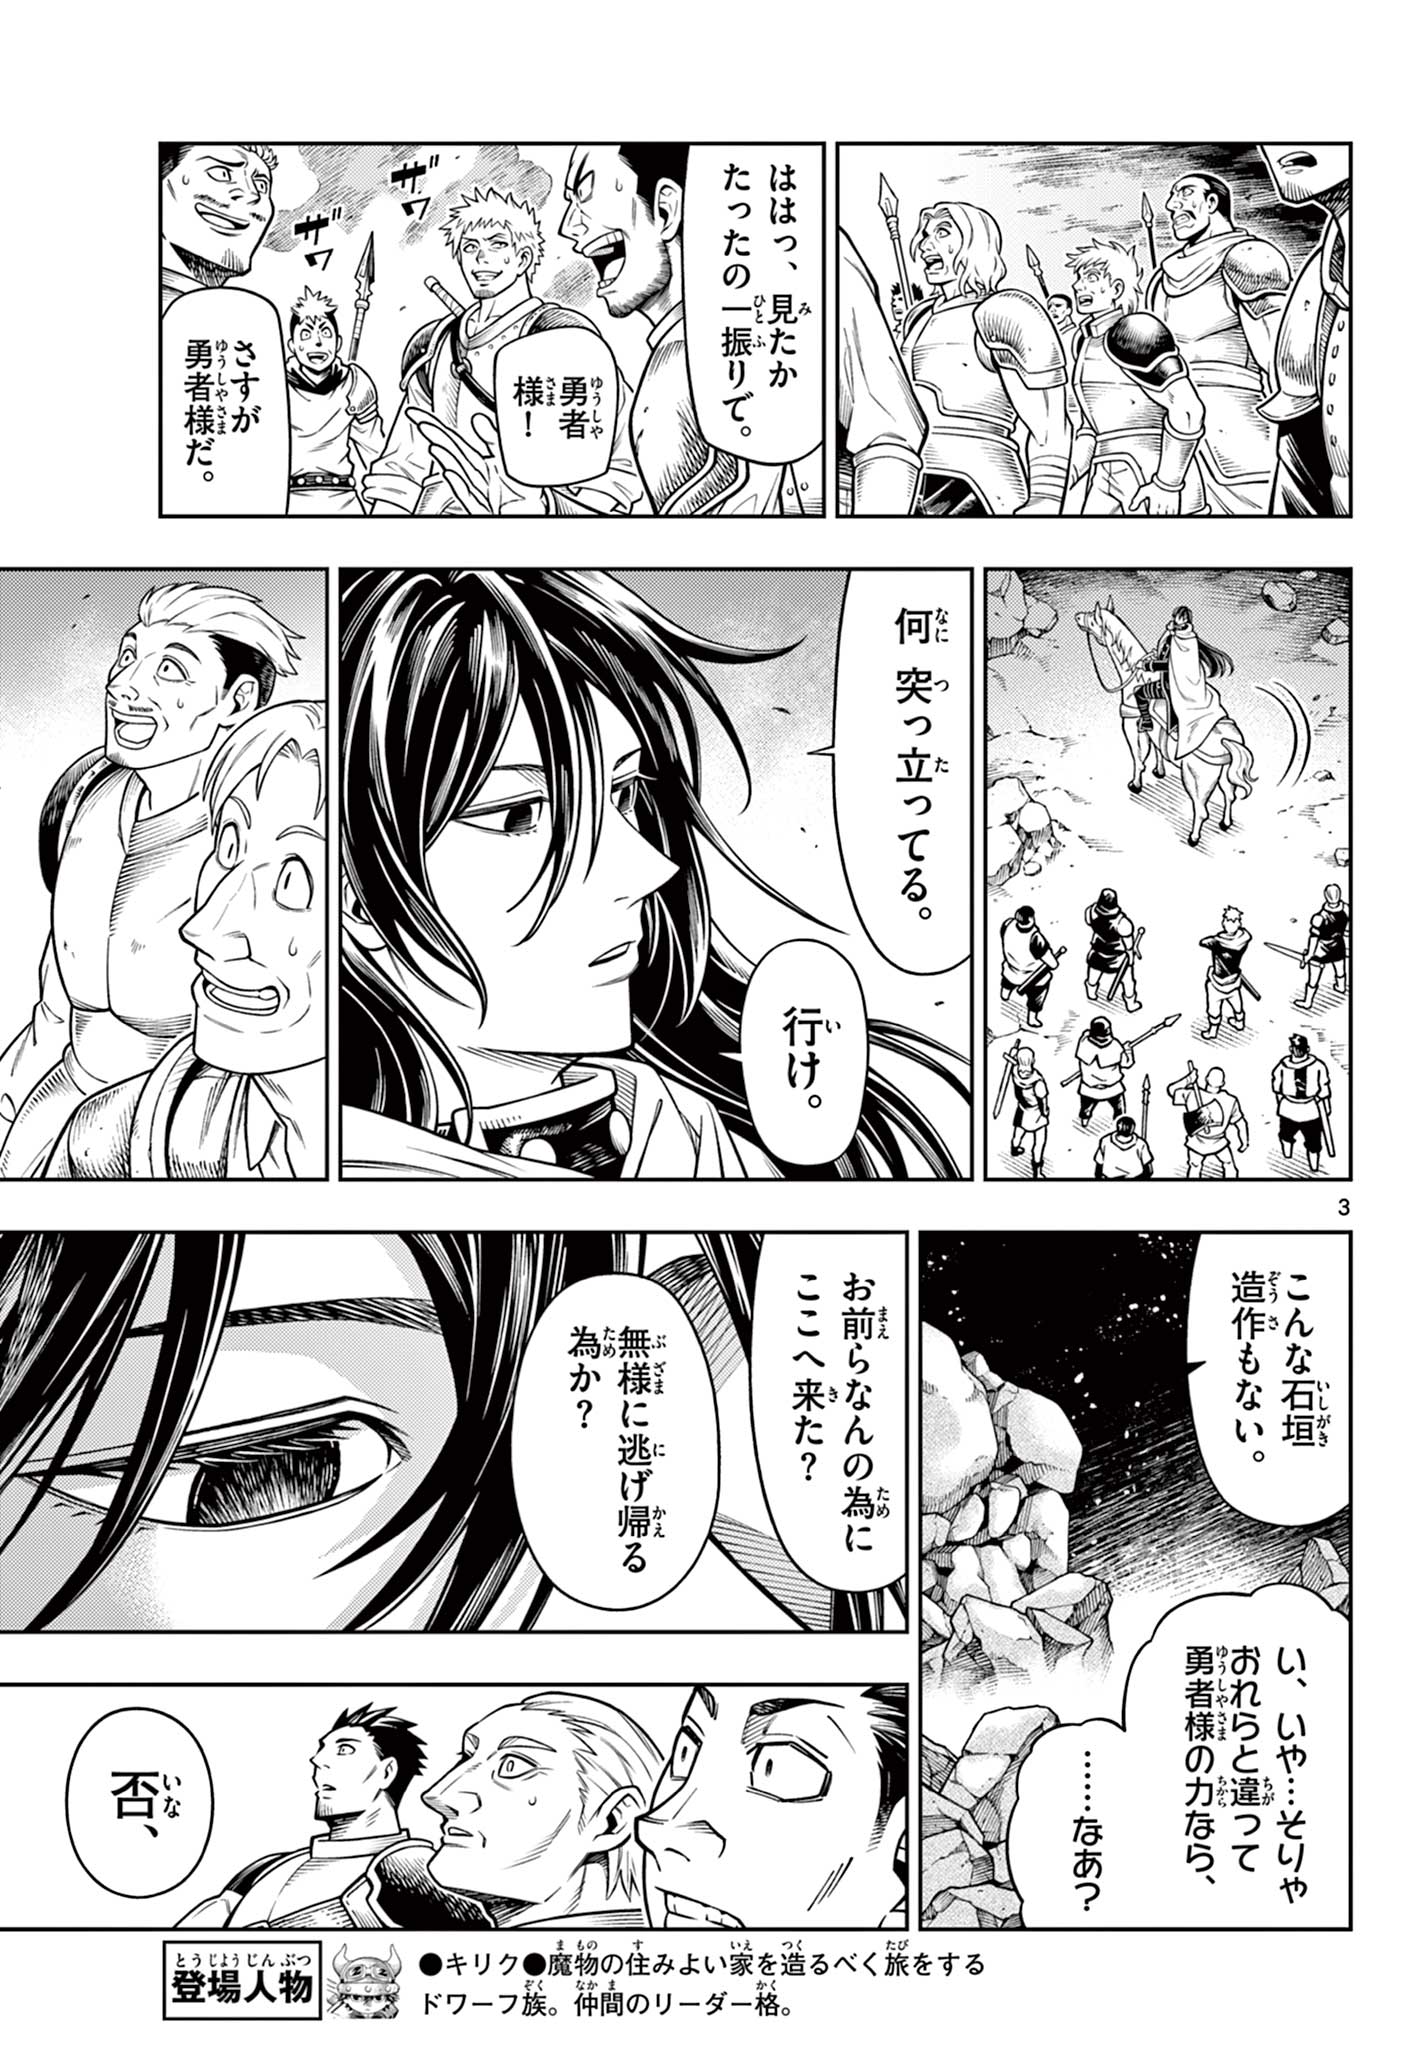 Soara to Mamono no ie - Chapter 28 - Page 3